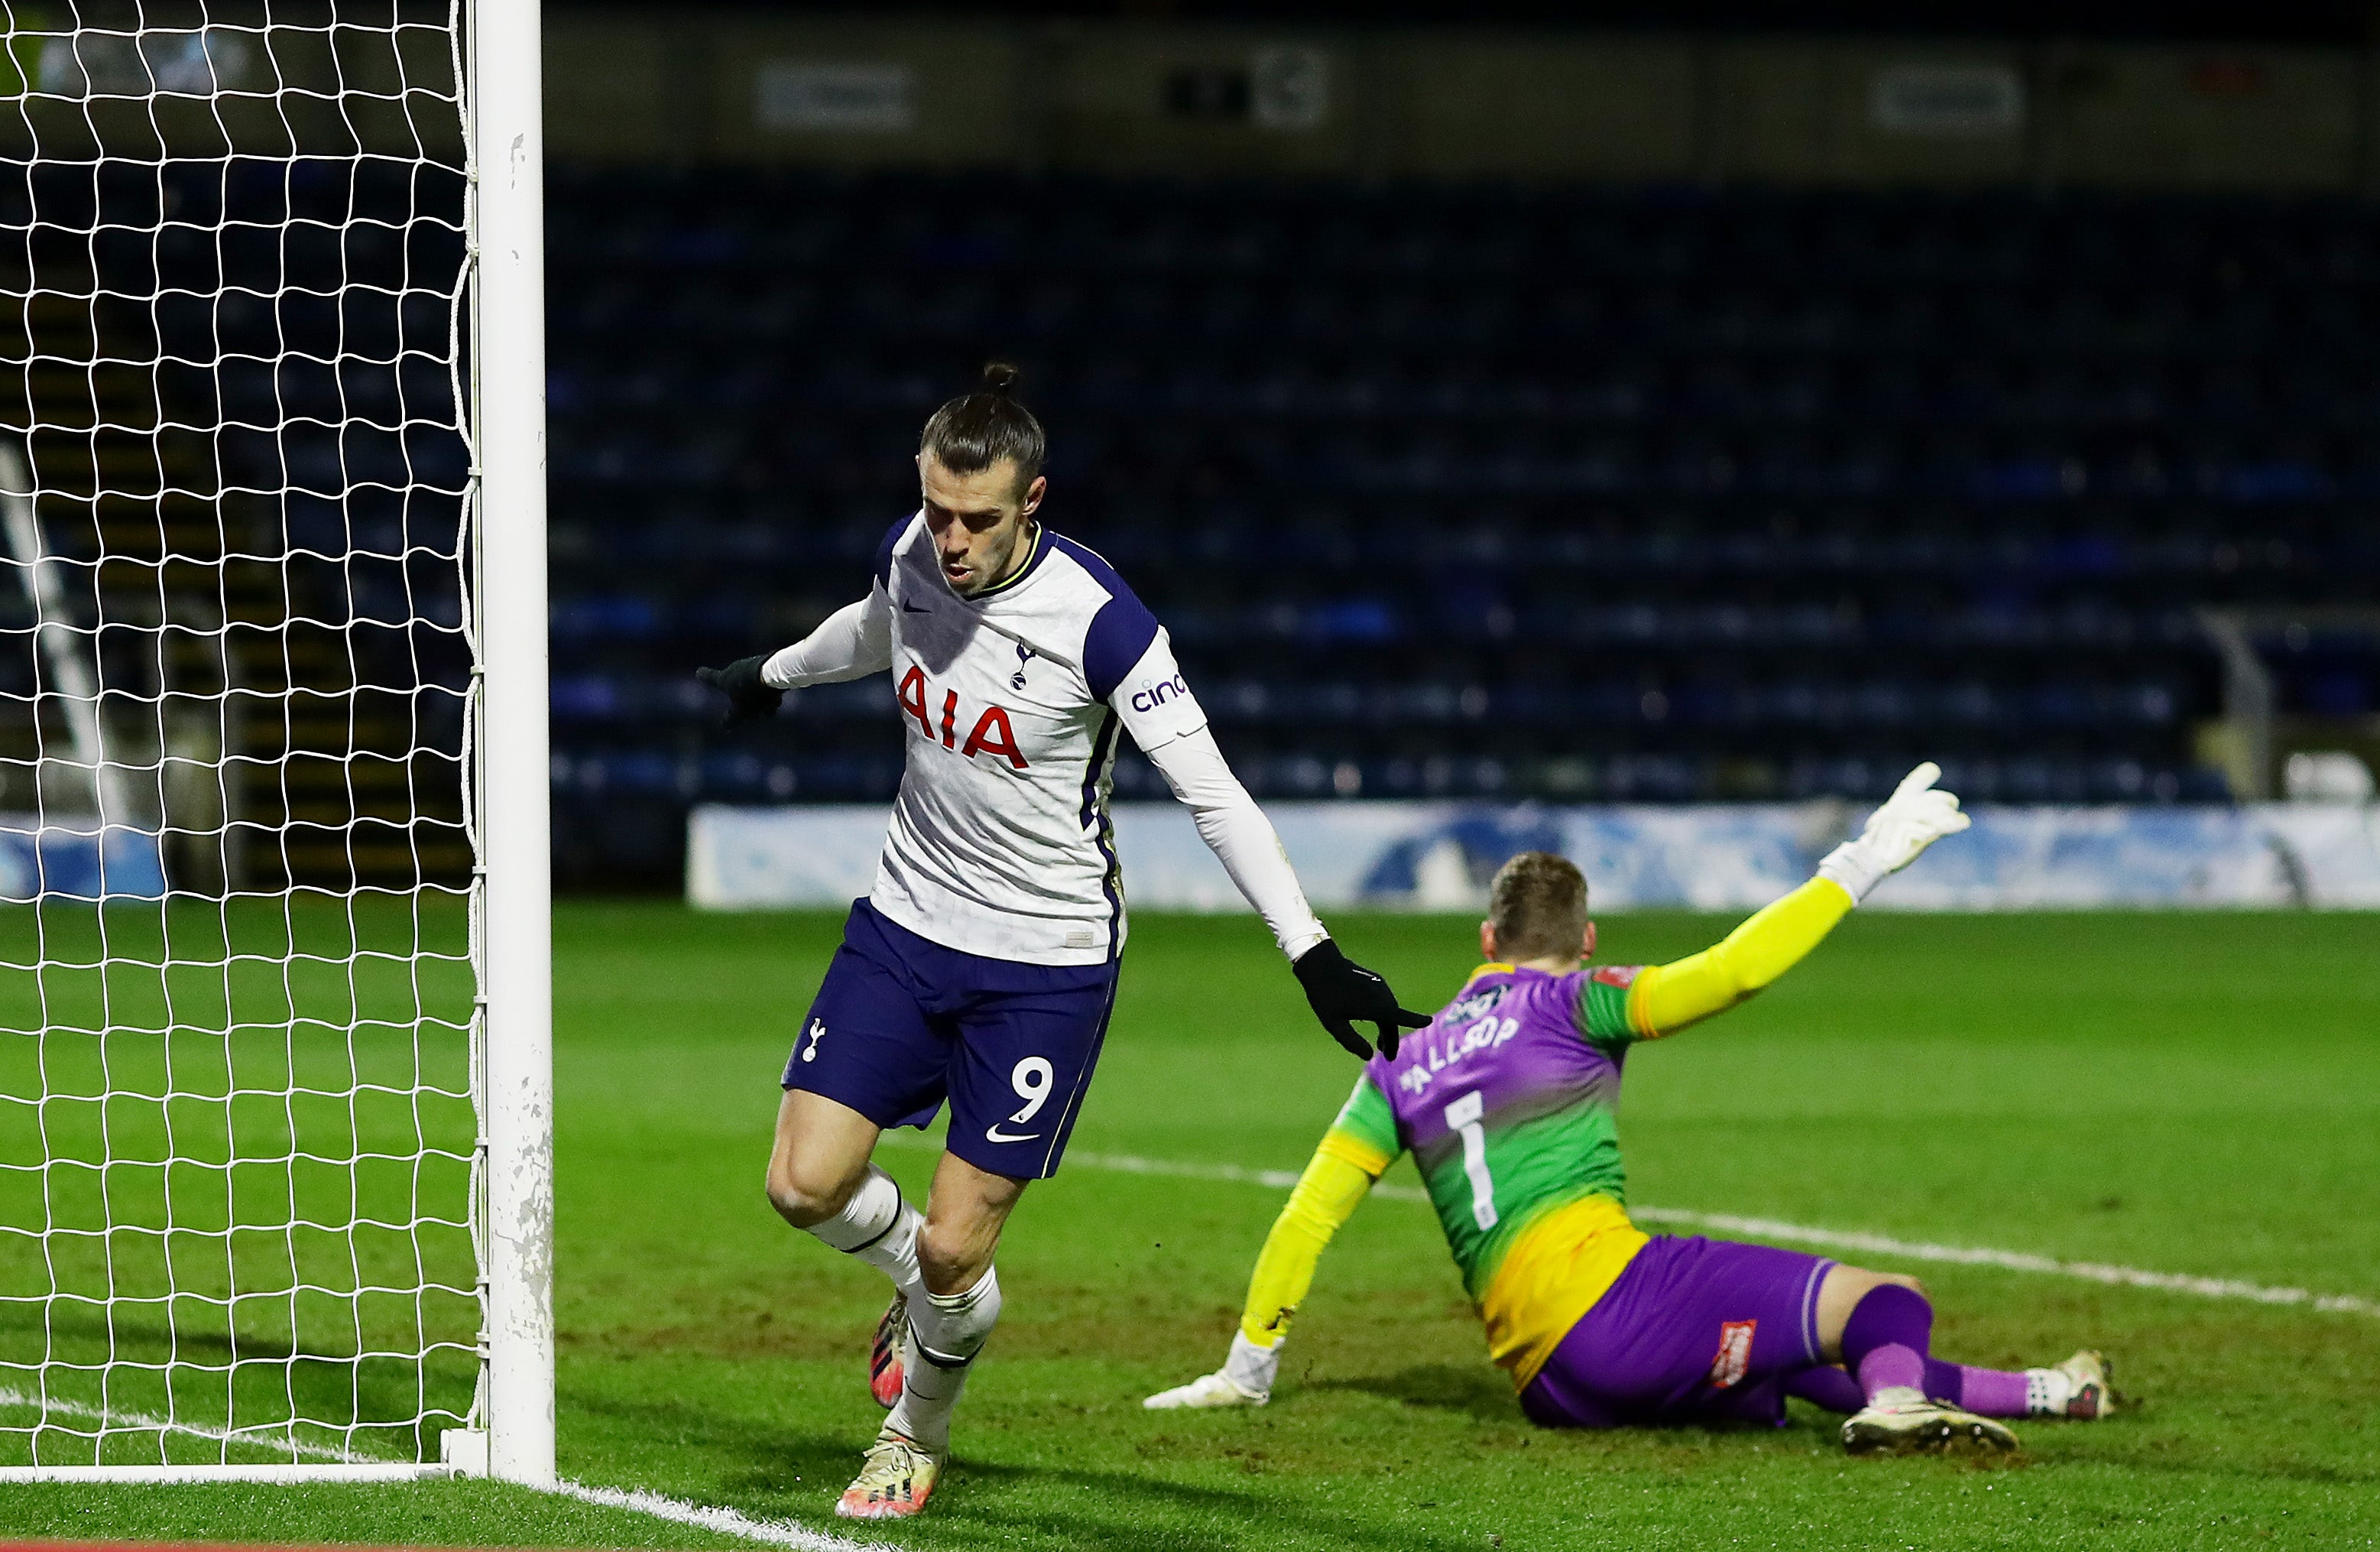 Gareth Bale targets Champions League with Tottenham Hotspur